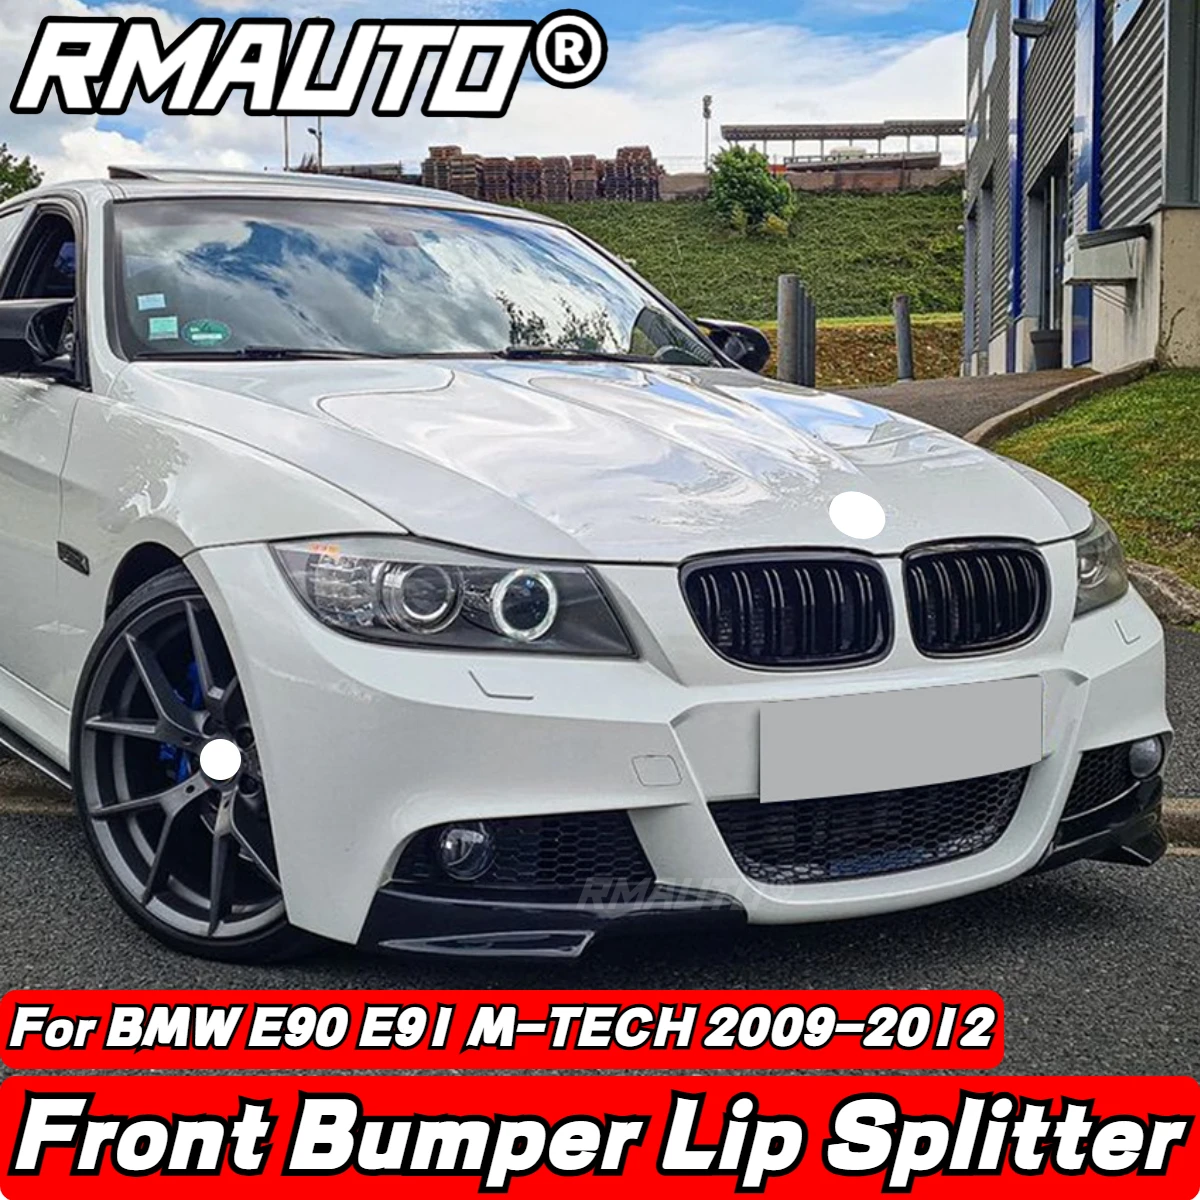 

E90 E91 Car Front Bumper Lip Apron Splitter Guard Protector Body Kit For BMW 3 Series E90 E91 M-Tech 2005-2012 Exterior Part